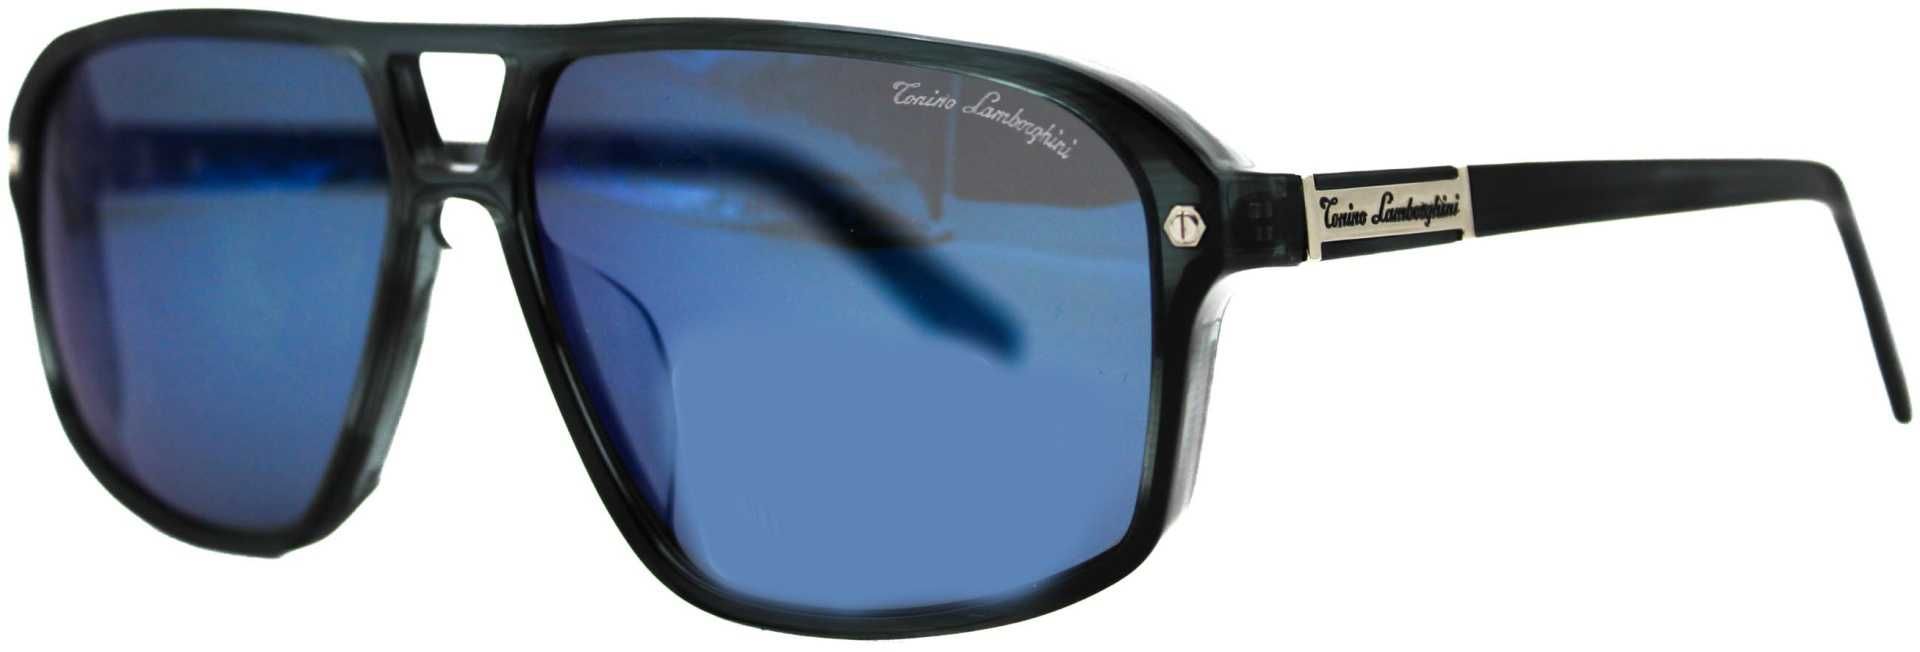 Солнцезащитные очки Lamborghini TL760-04